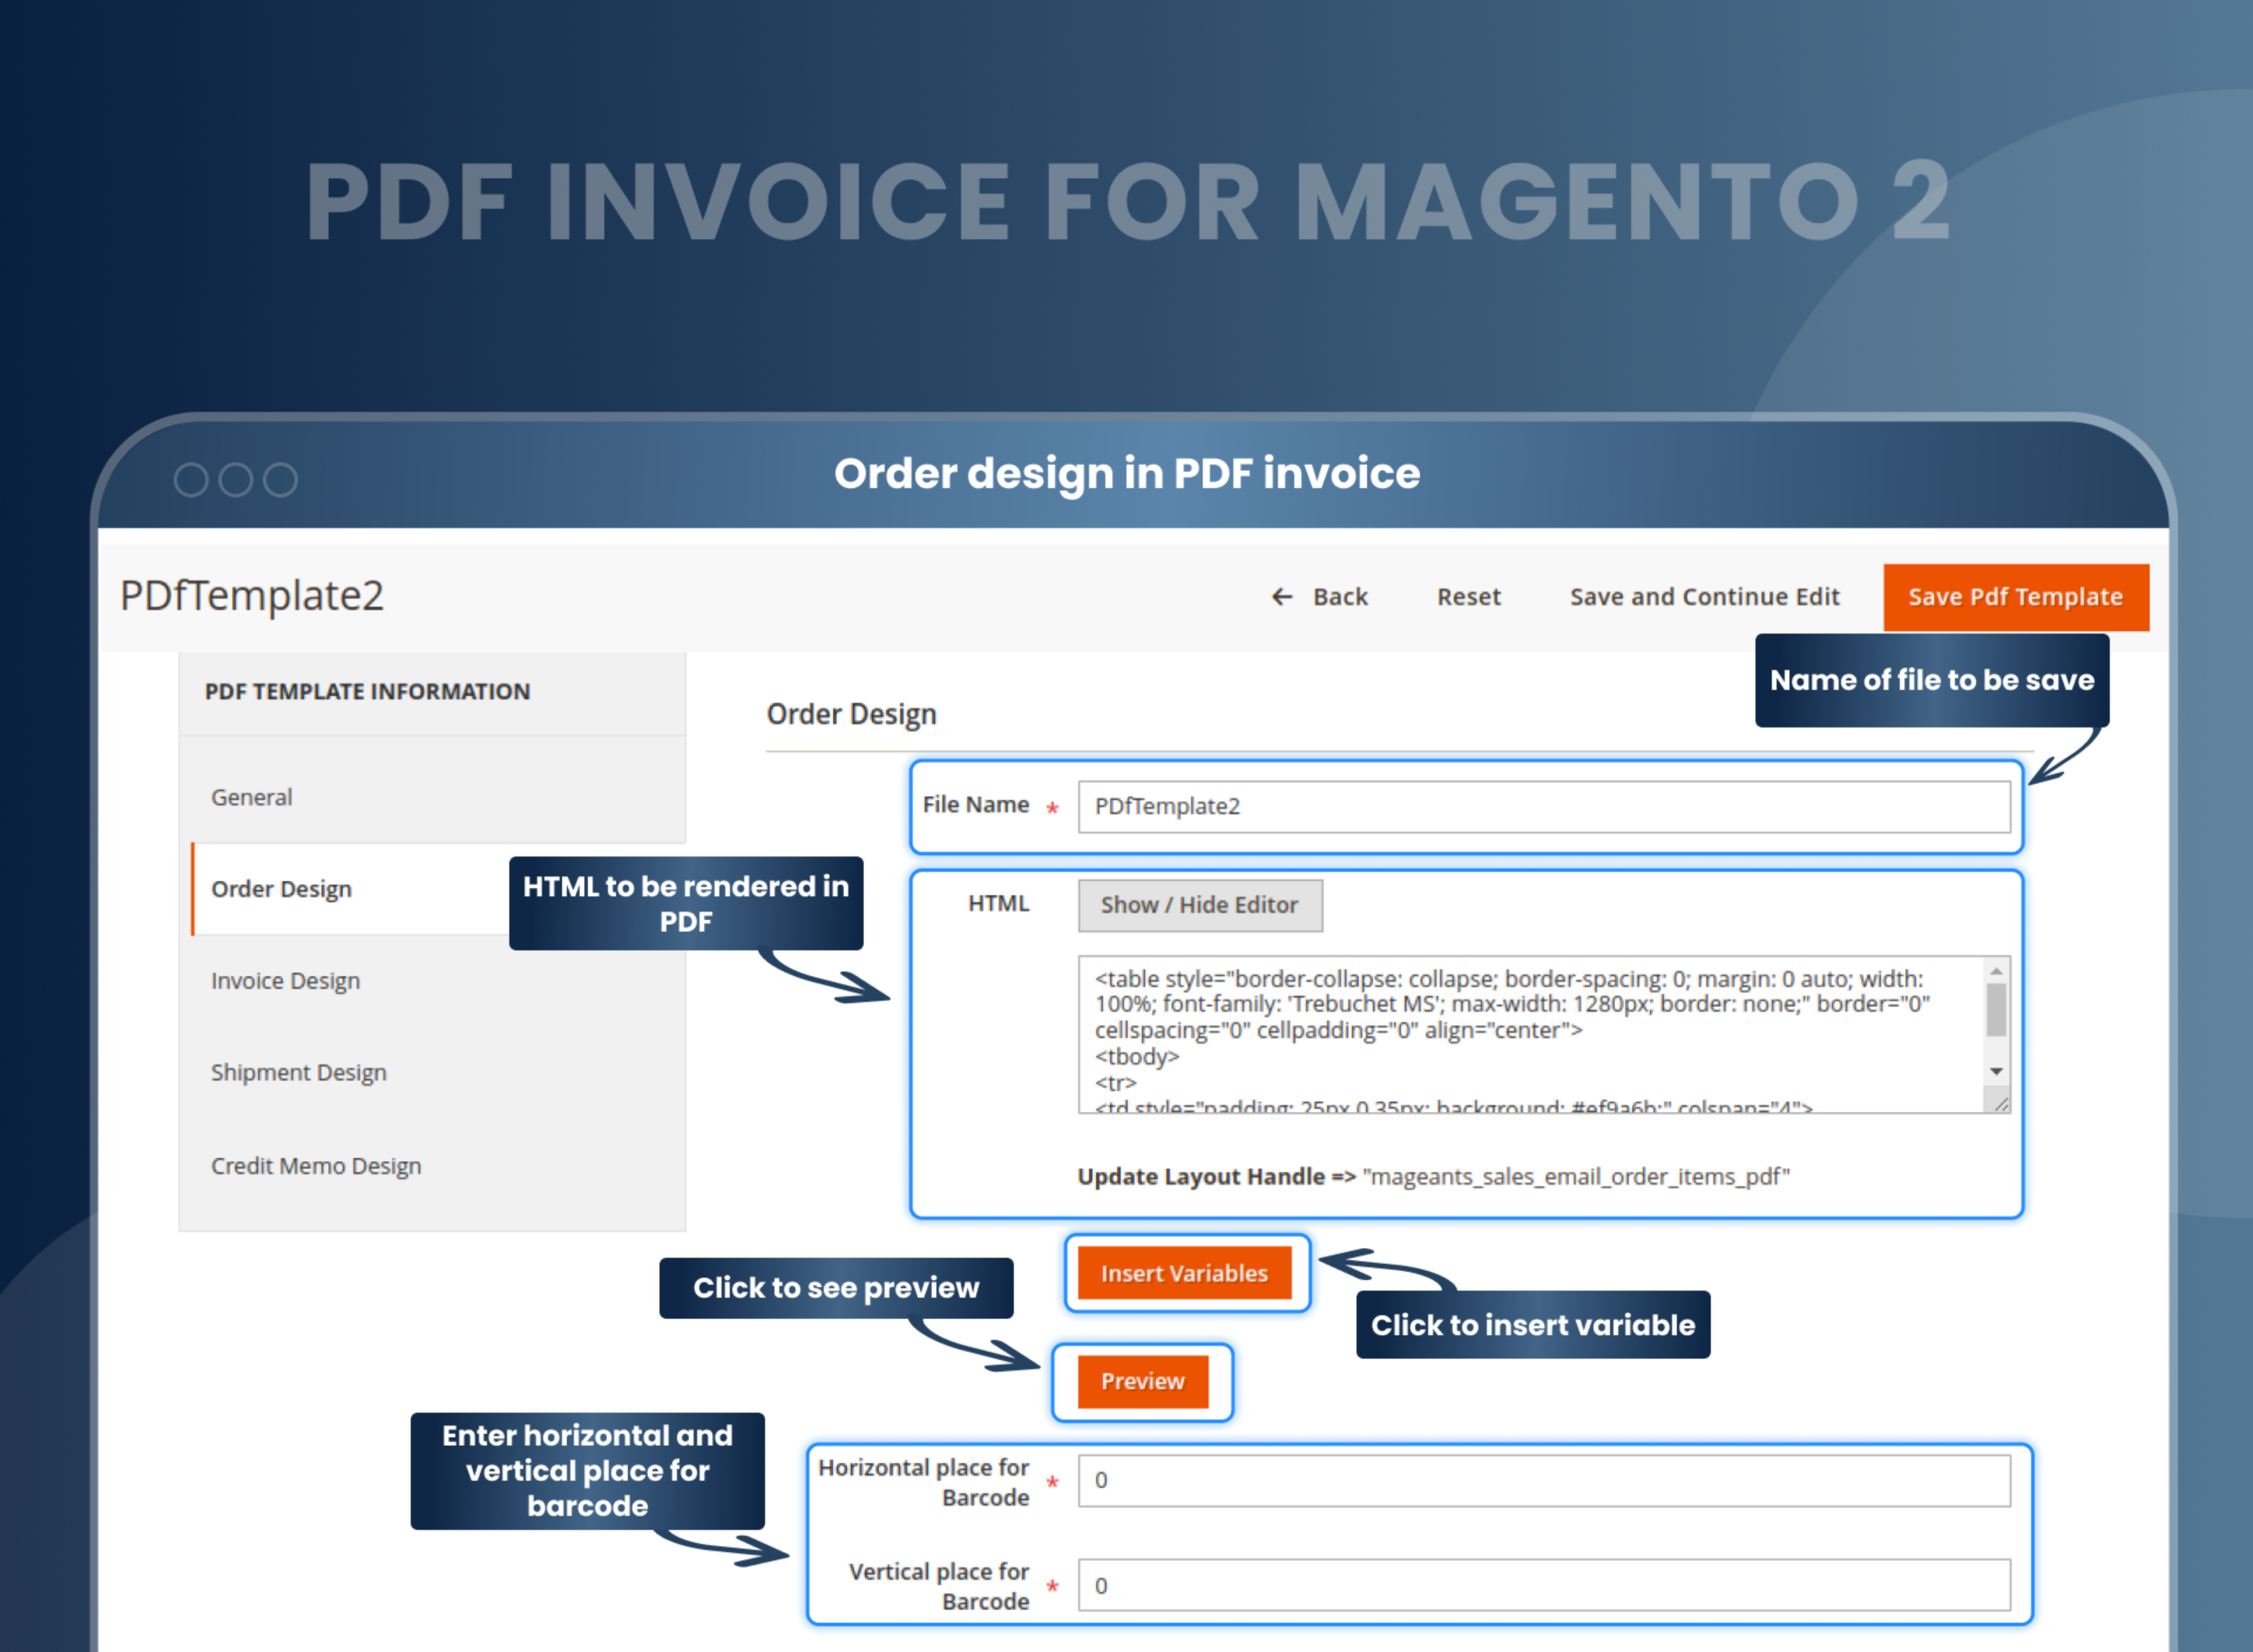 Order design in PDF invoice